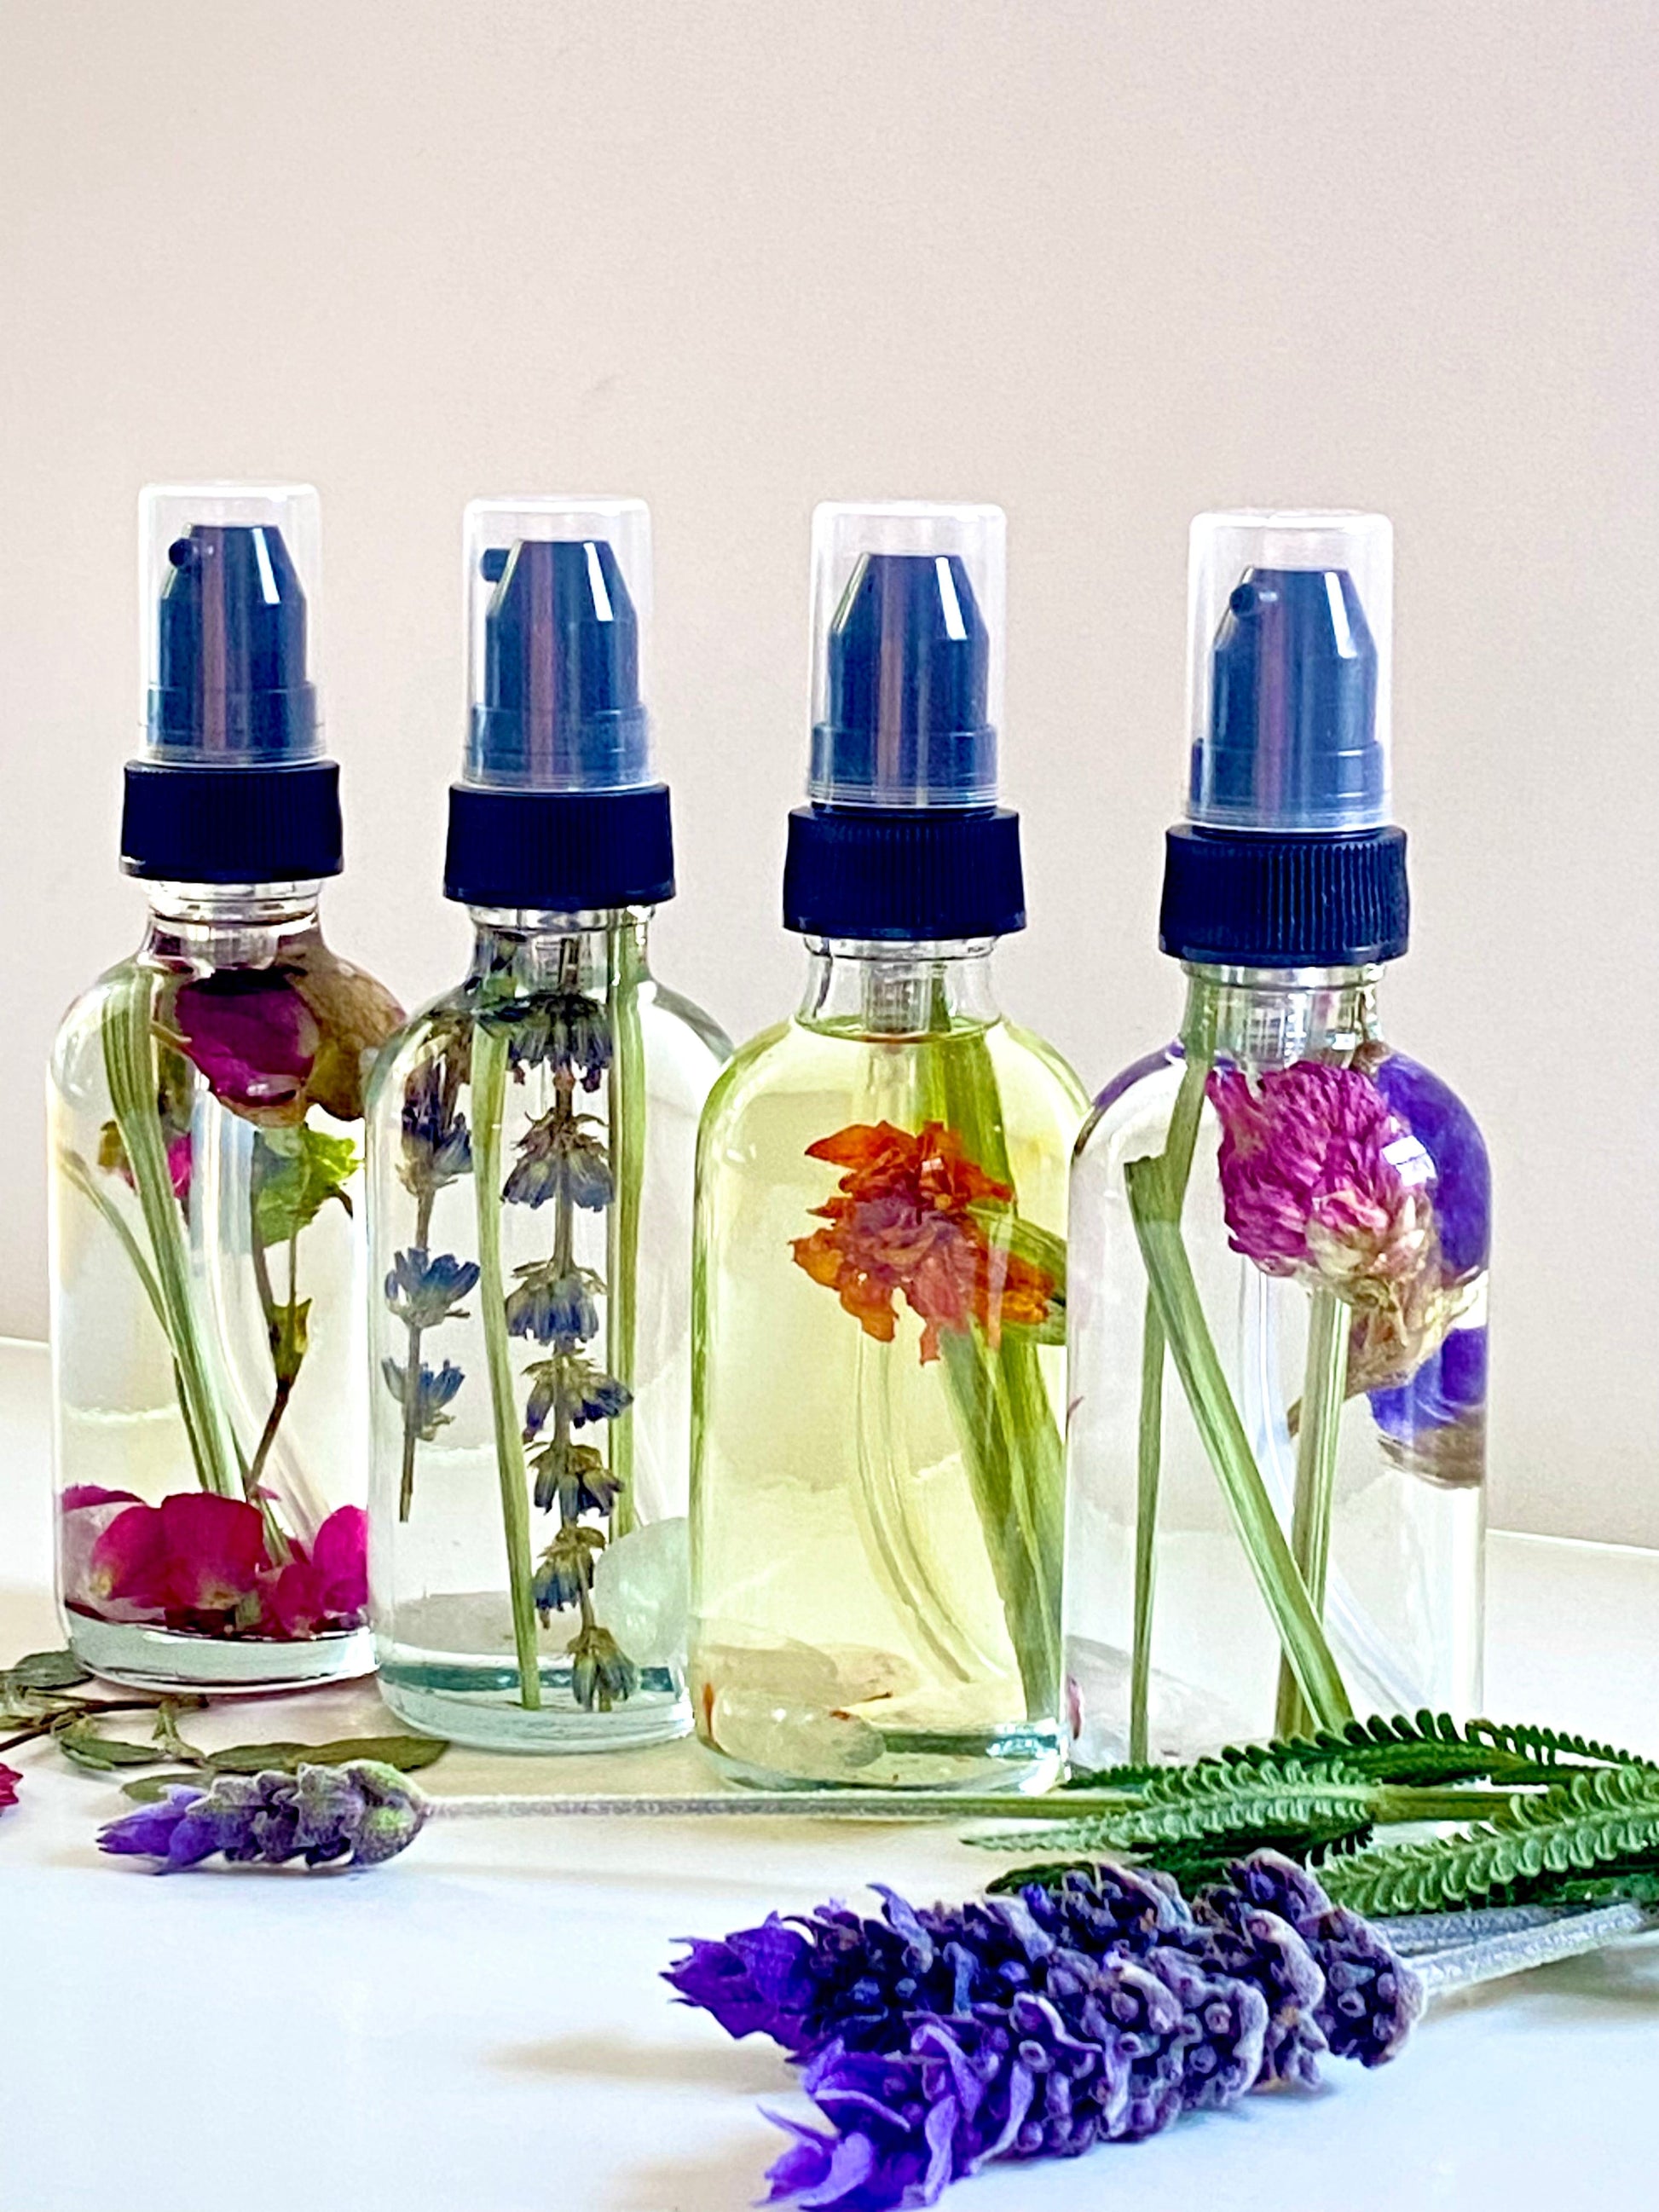 Zemala Natur'el Moisturizers Herbal Body Oils with Rose Quartz Crystals